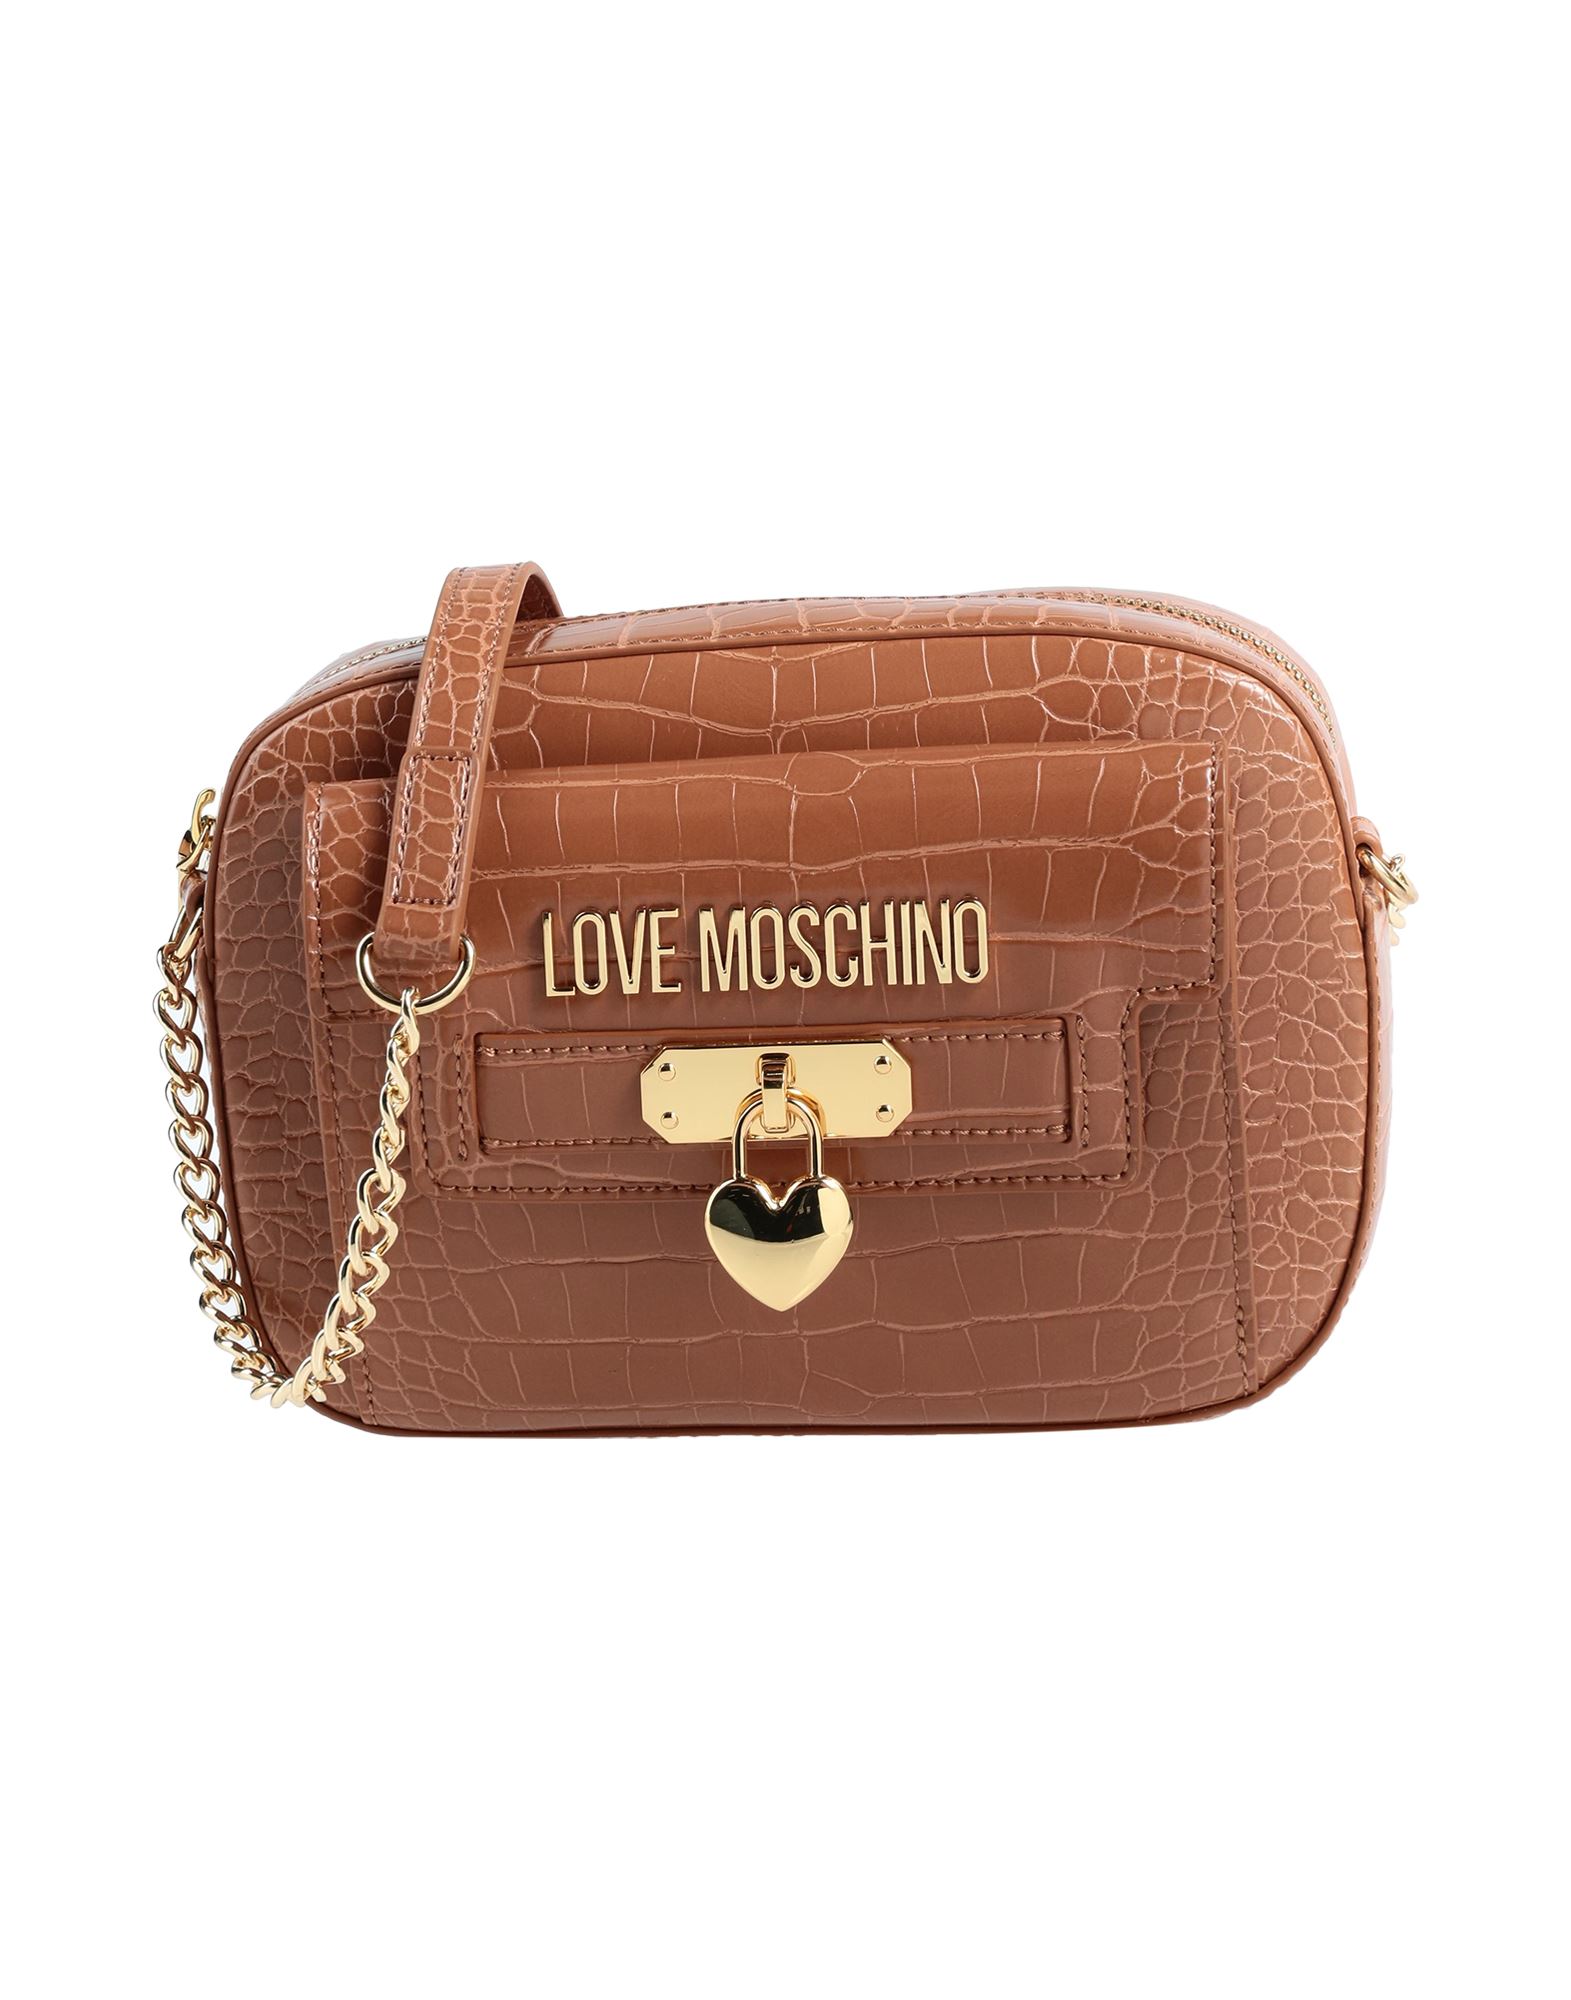 Love Moschino Handbags In Camel